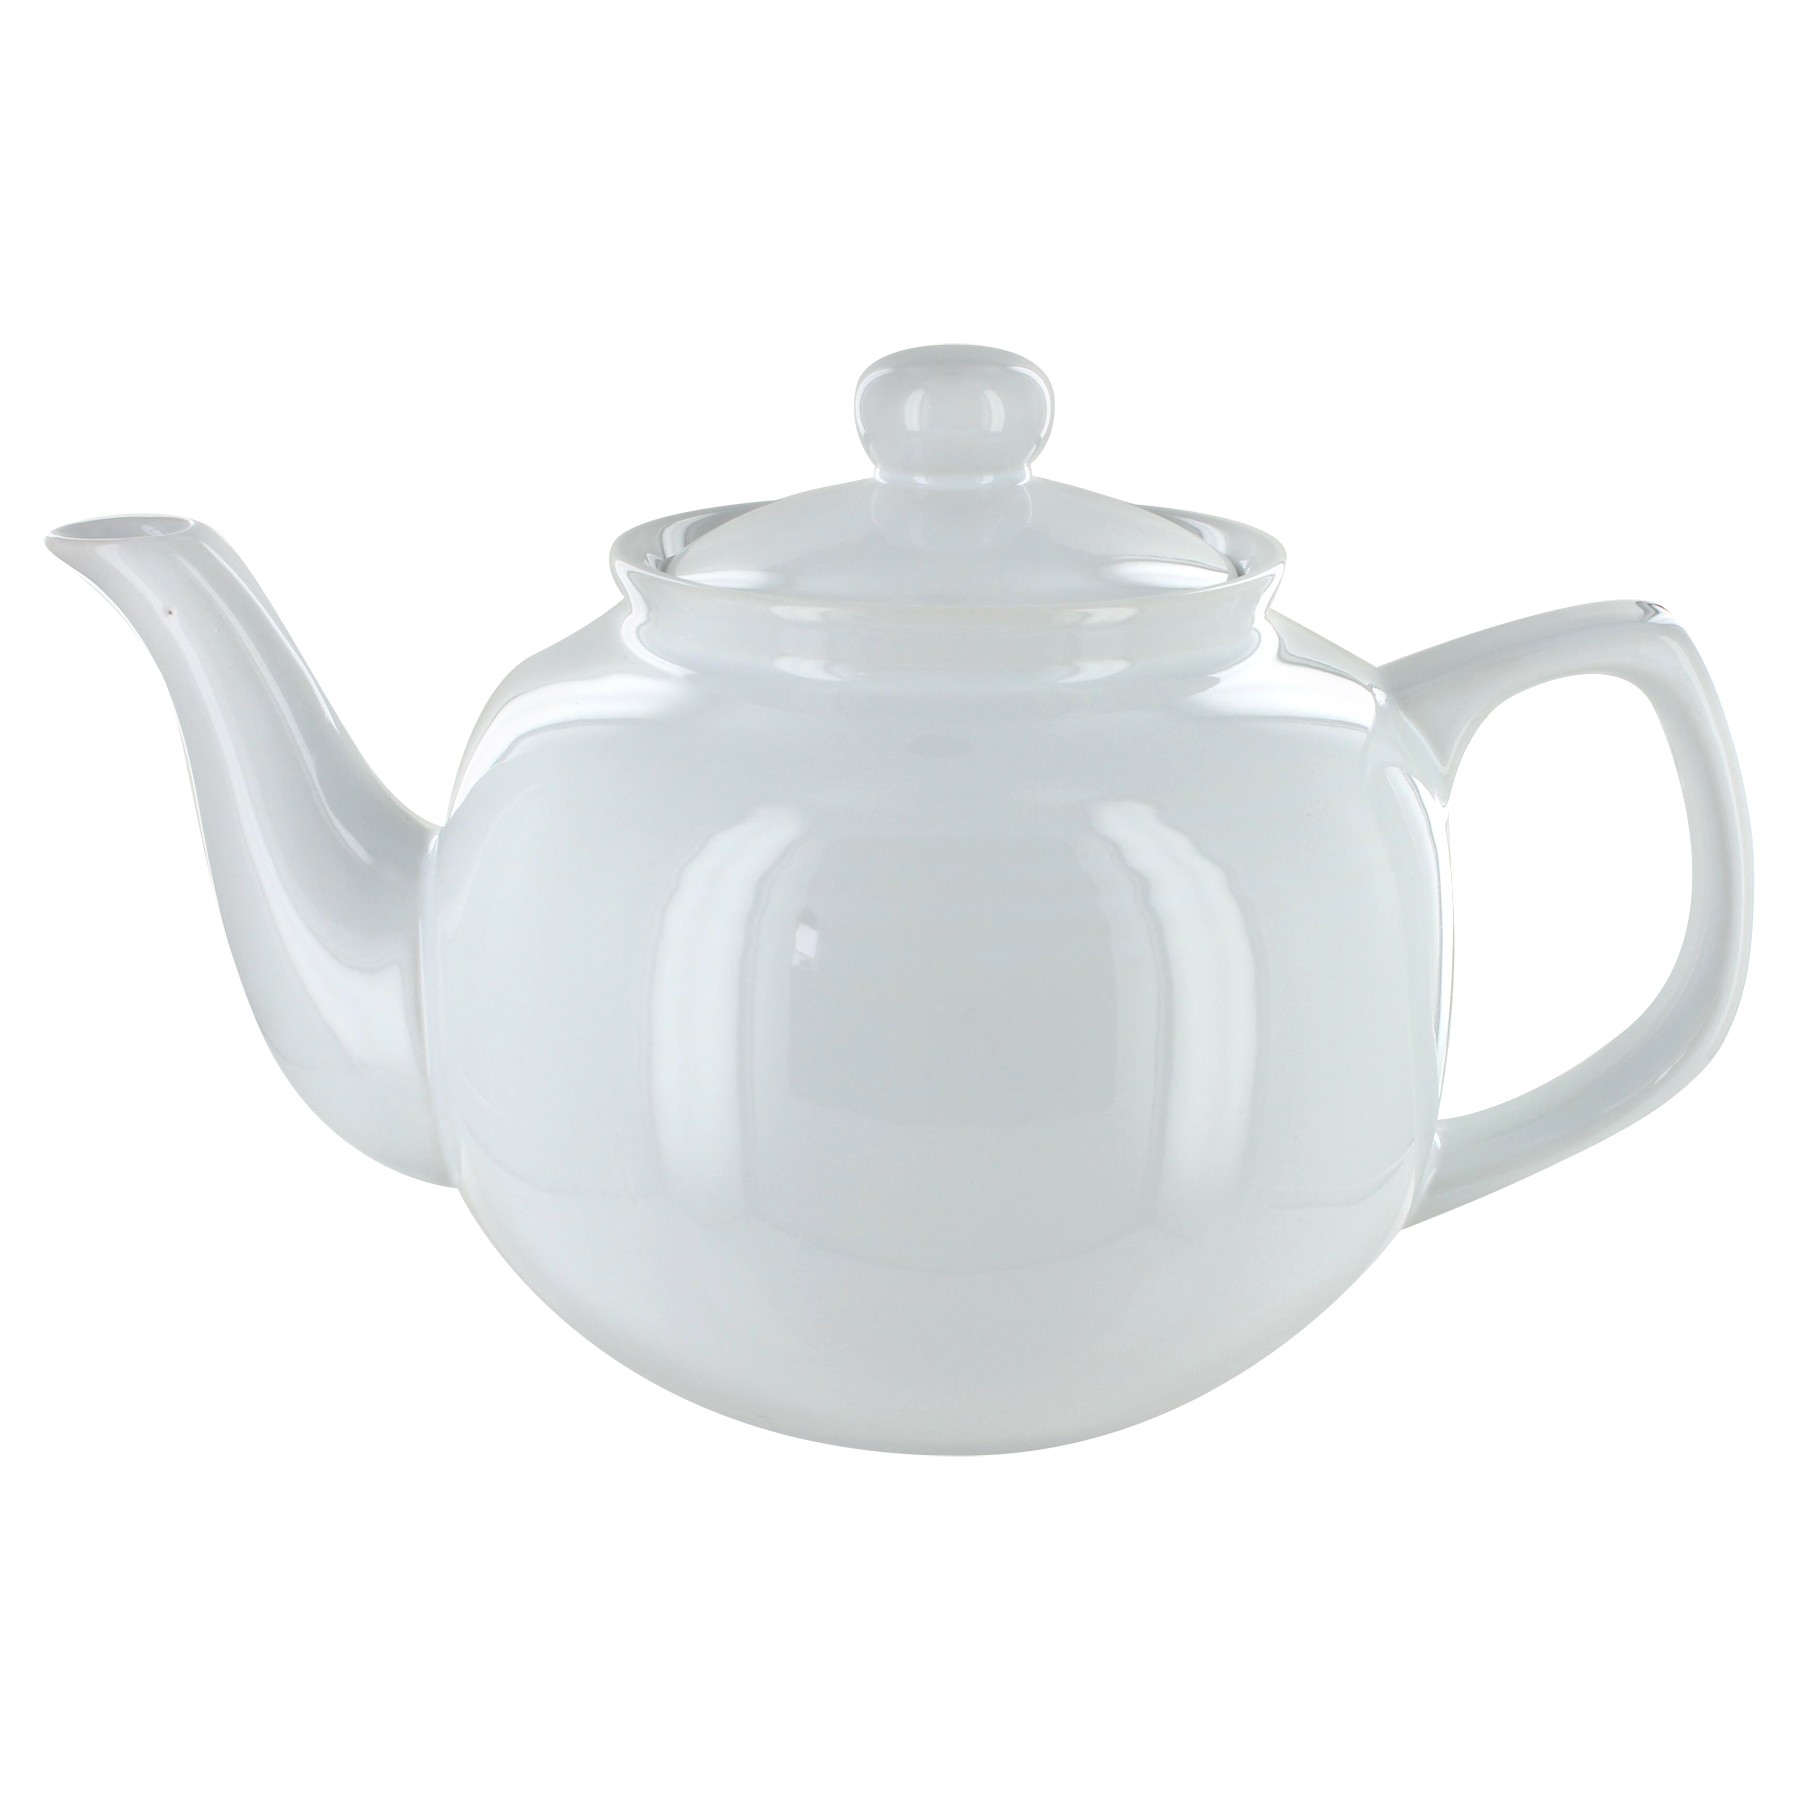 English Tea Store Brand 6 Cup Teapot - White Gloss Finish